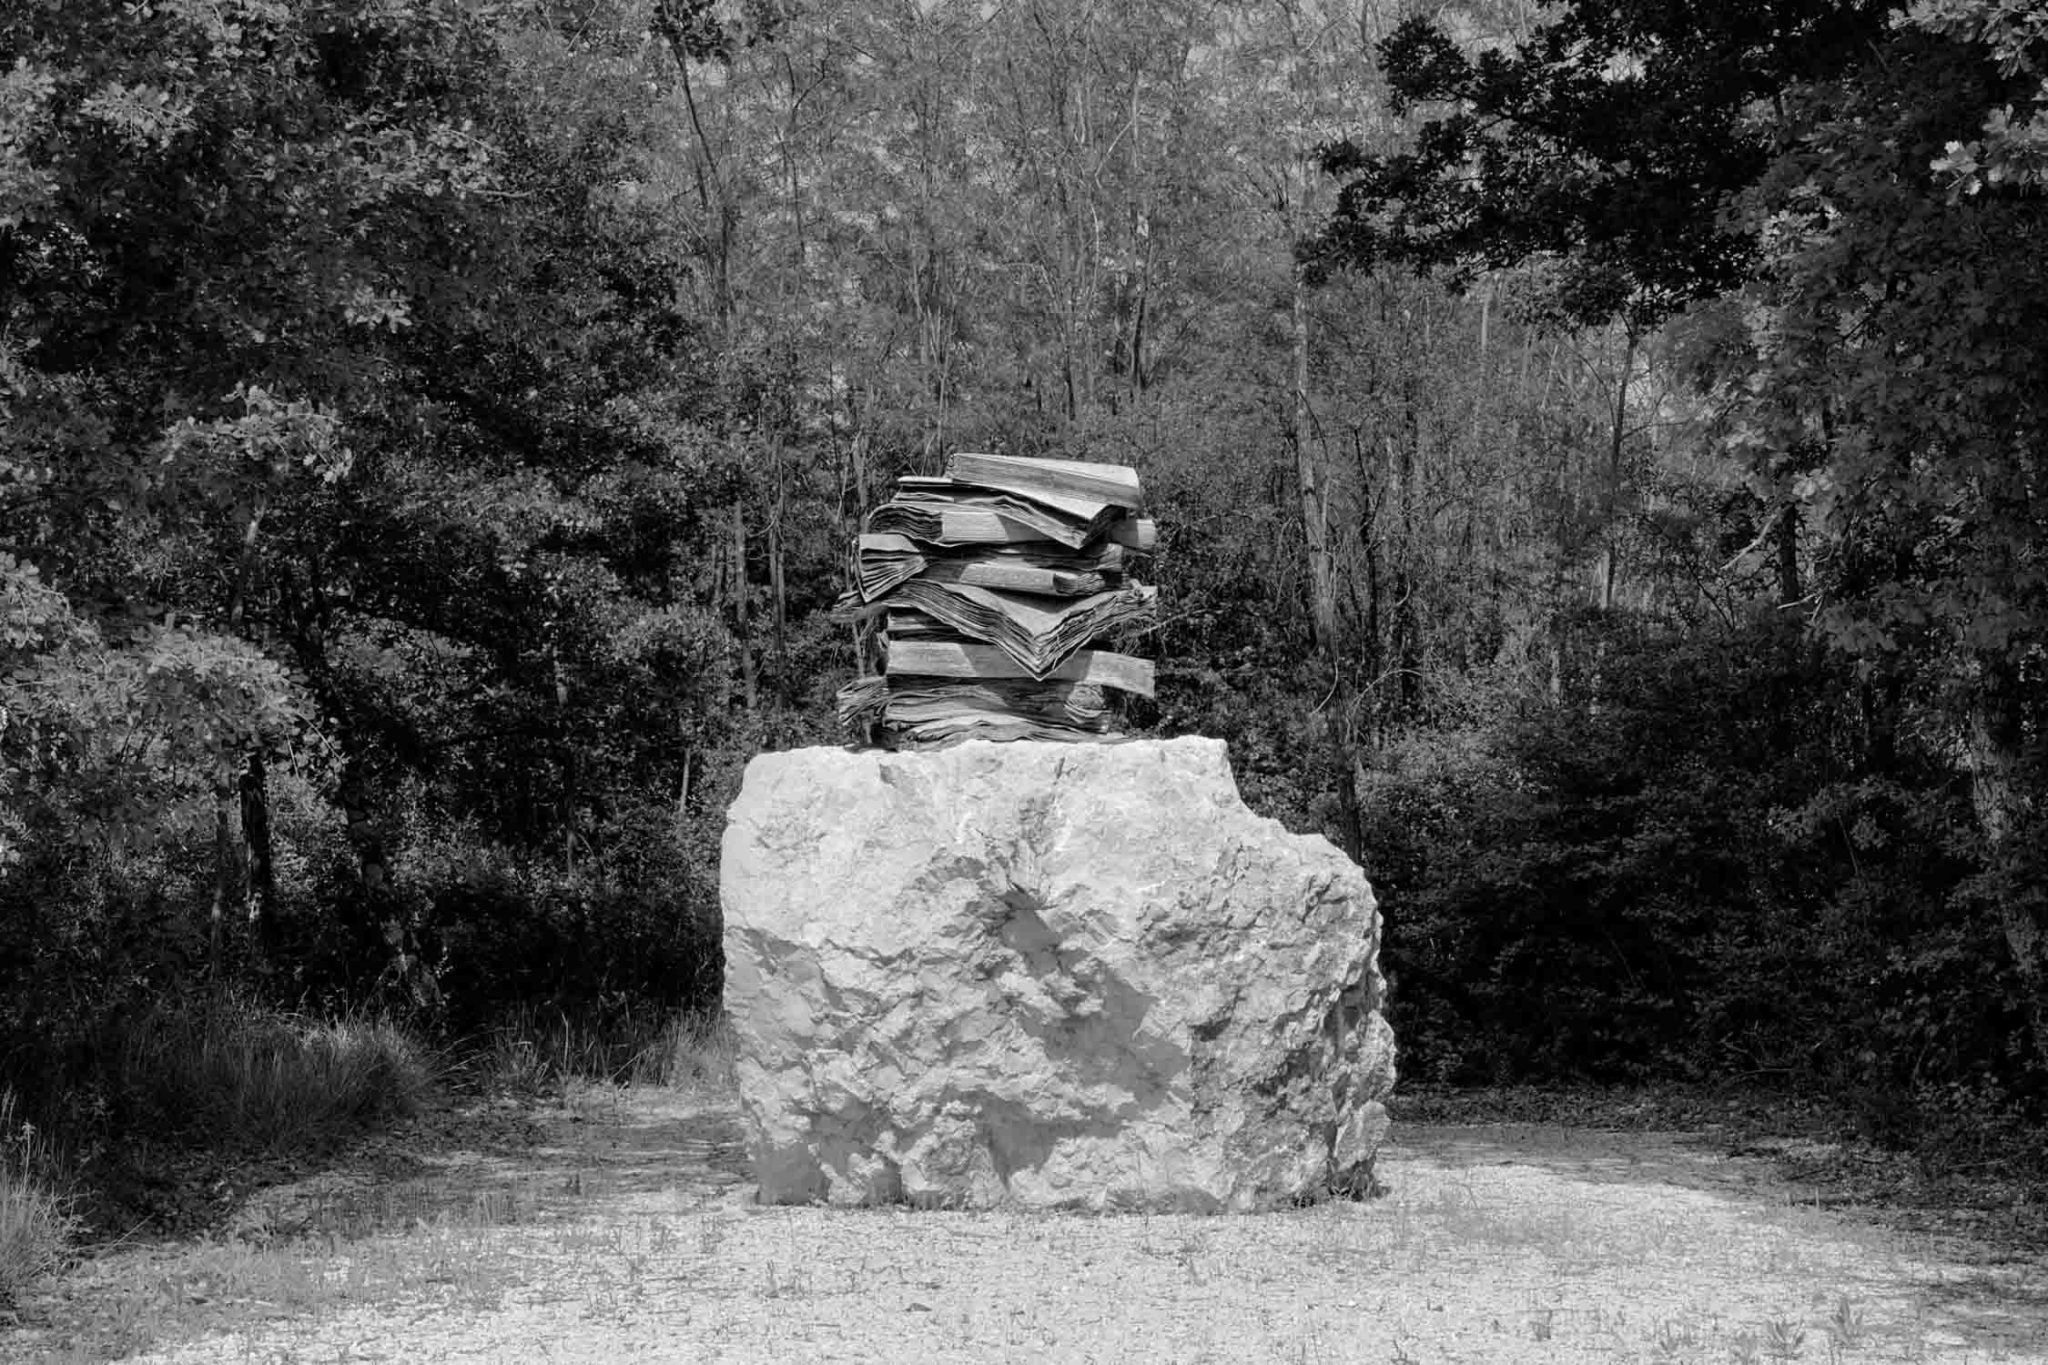 Lead book sculpture on boulder